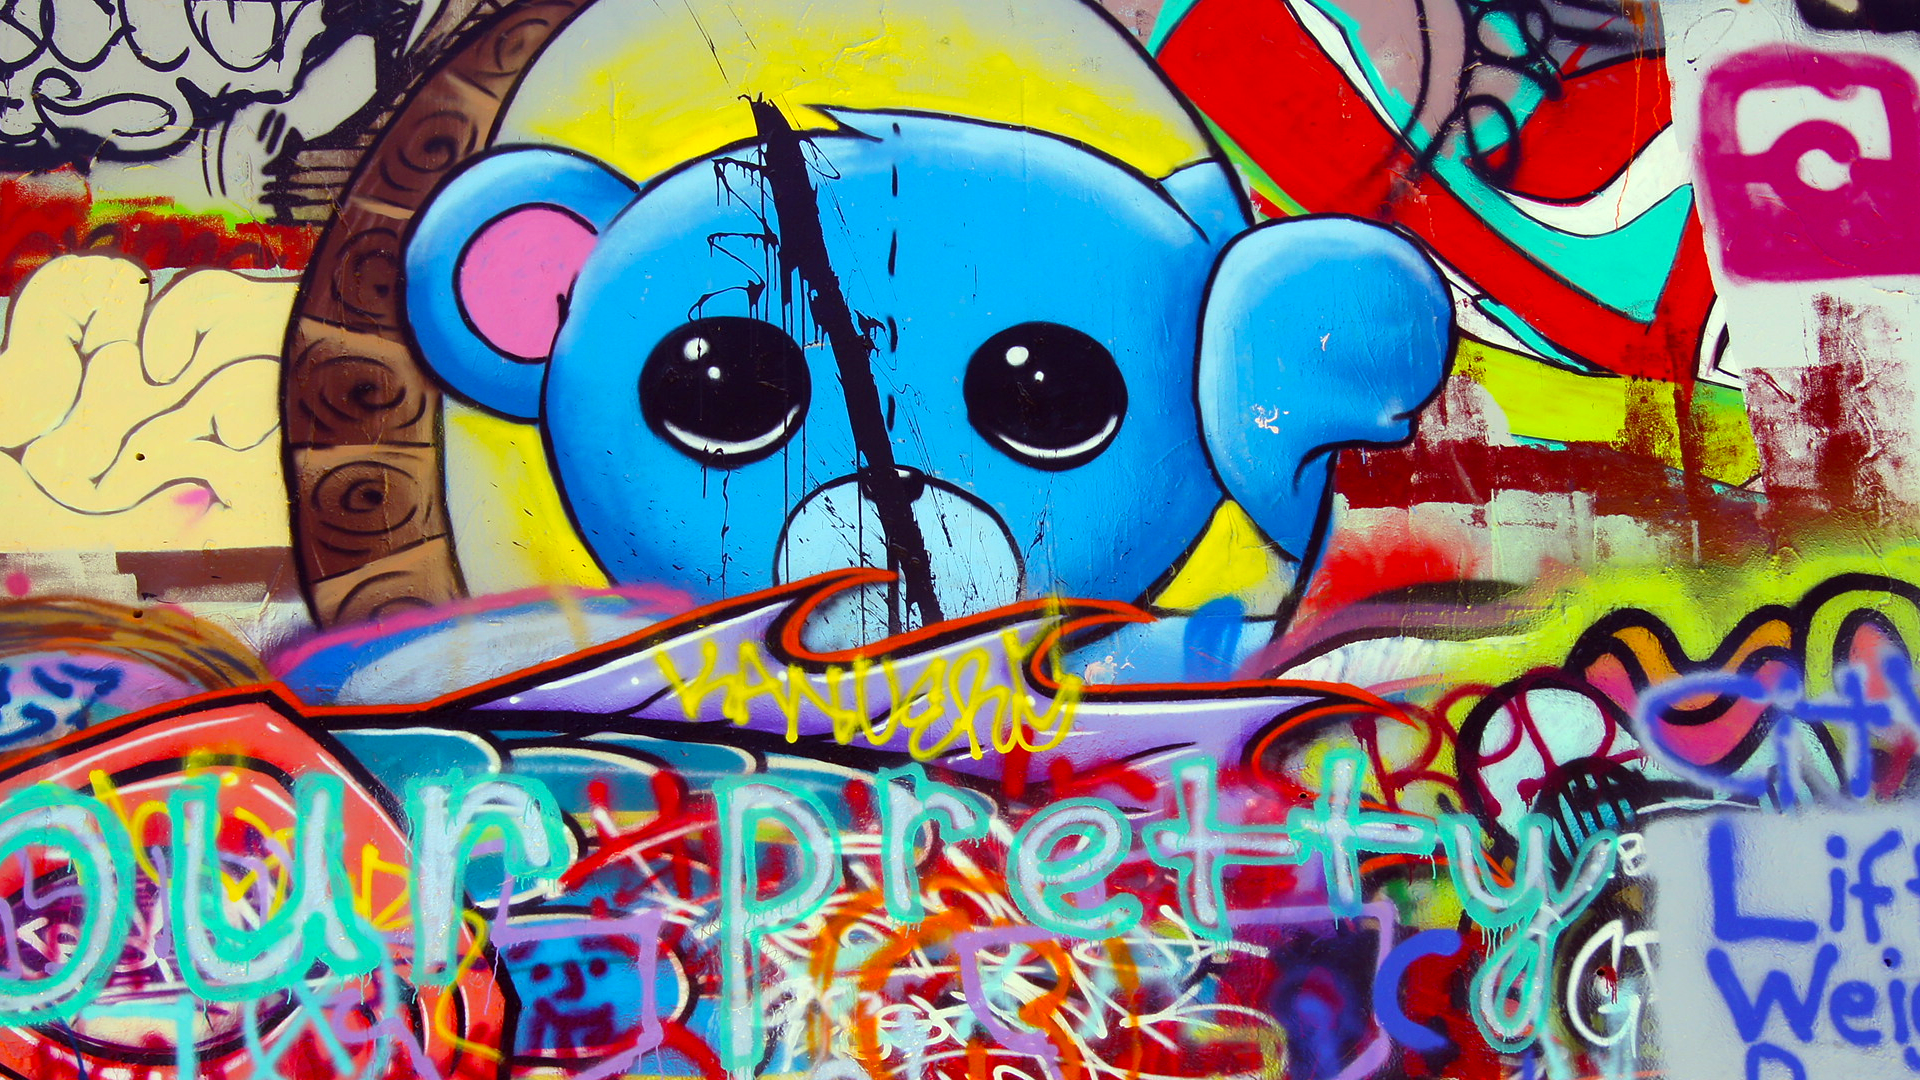 31+] Awesome Graffiti Wallpaper HD - WallpaperSafari